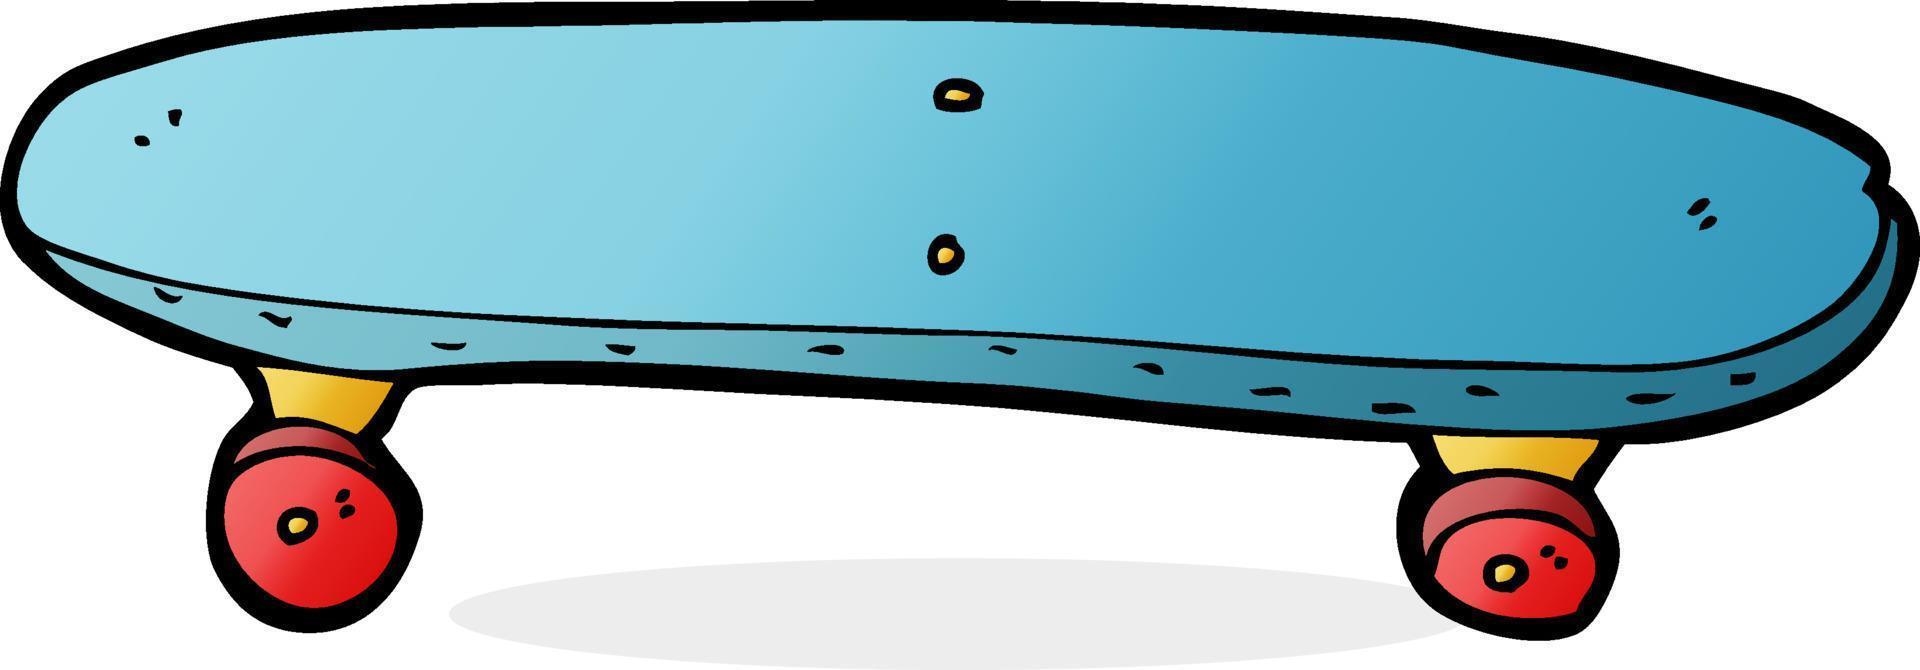 Gekritzel-Cartoon-Skateboard vektor